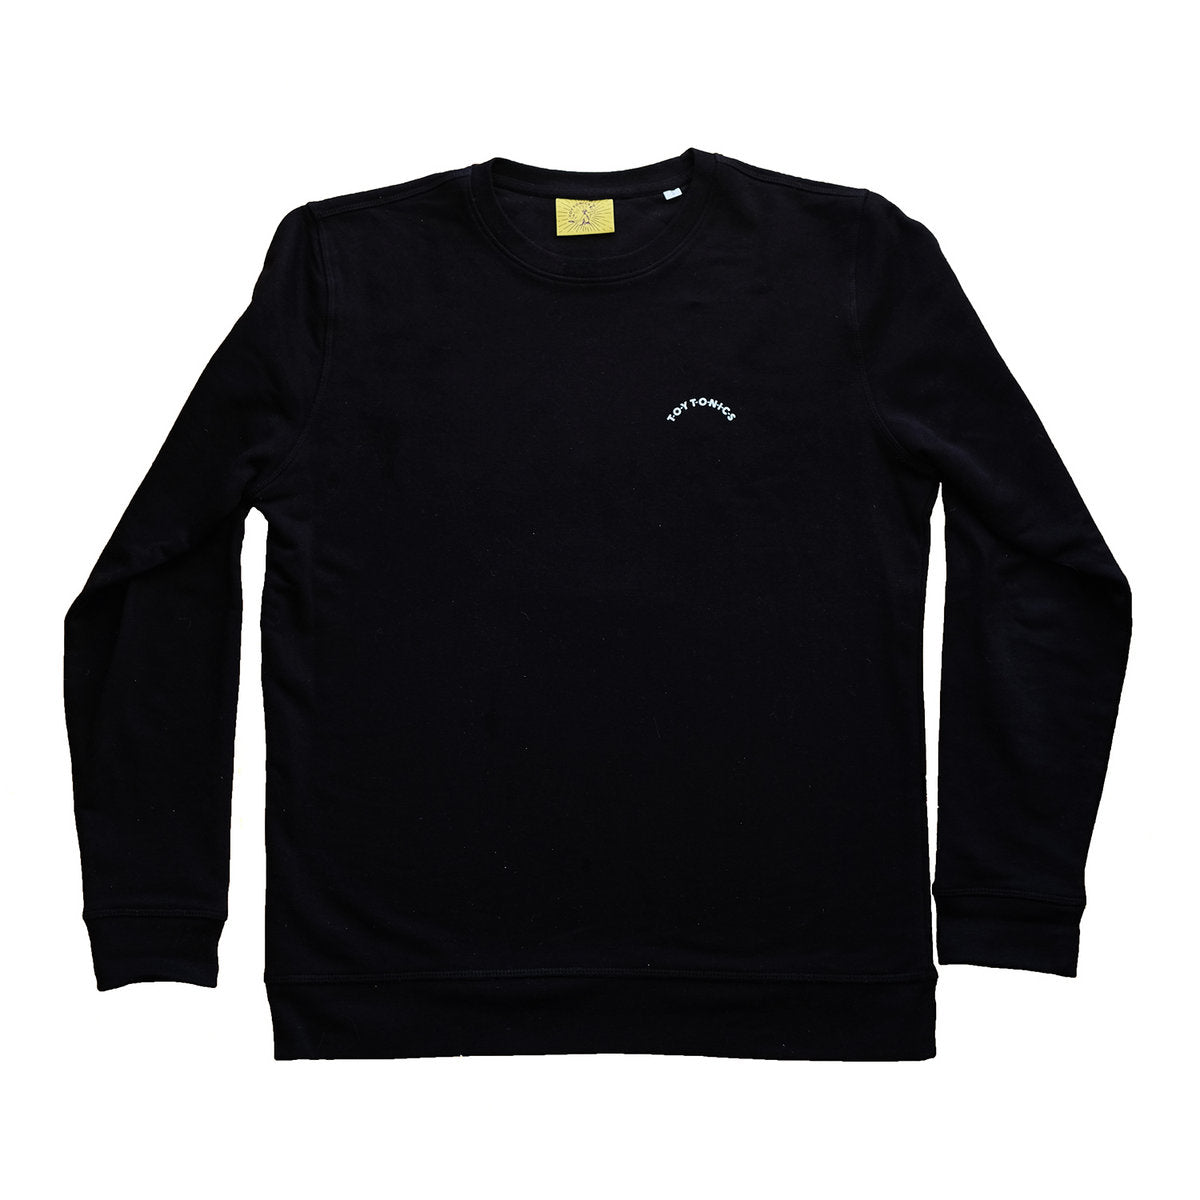 Sweater - black (big white back logo)